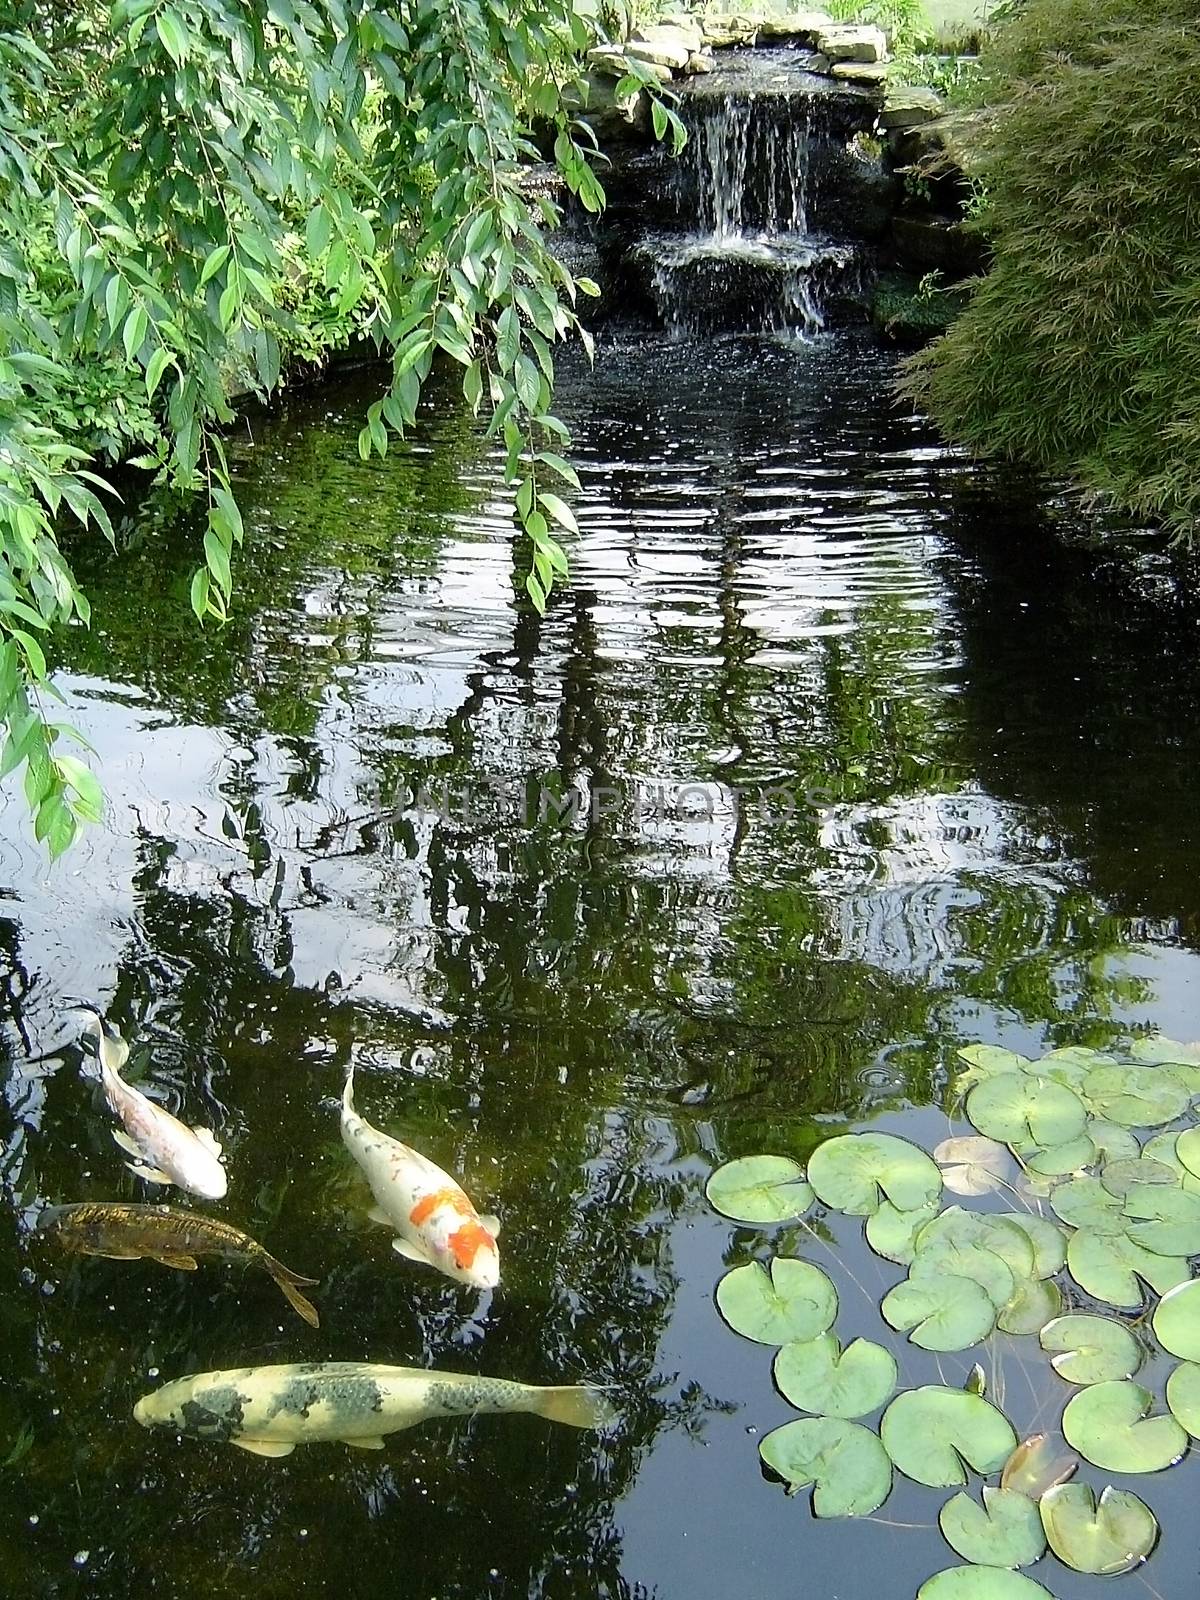 Koi in the quiet pond